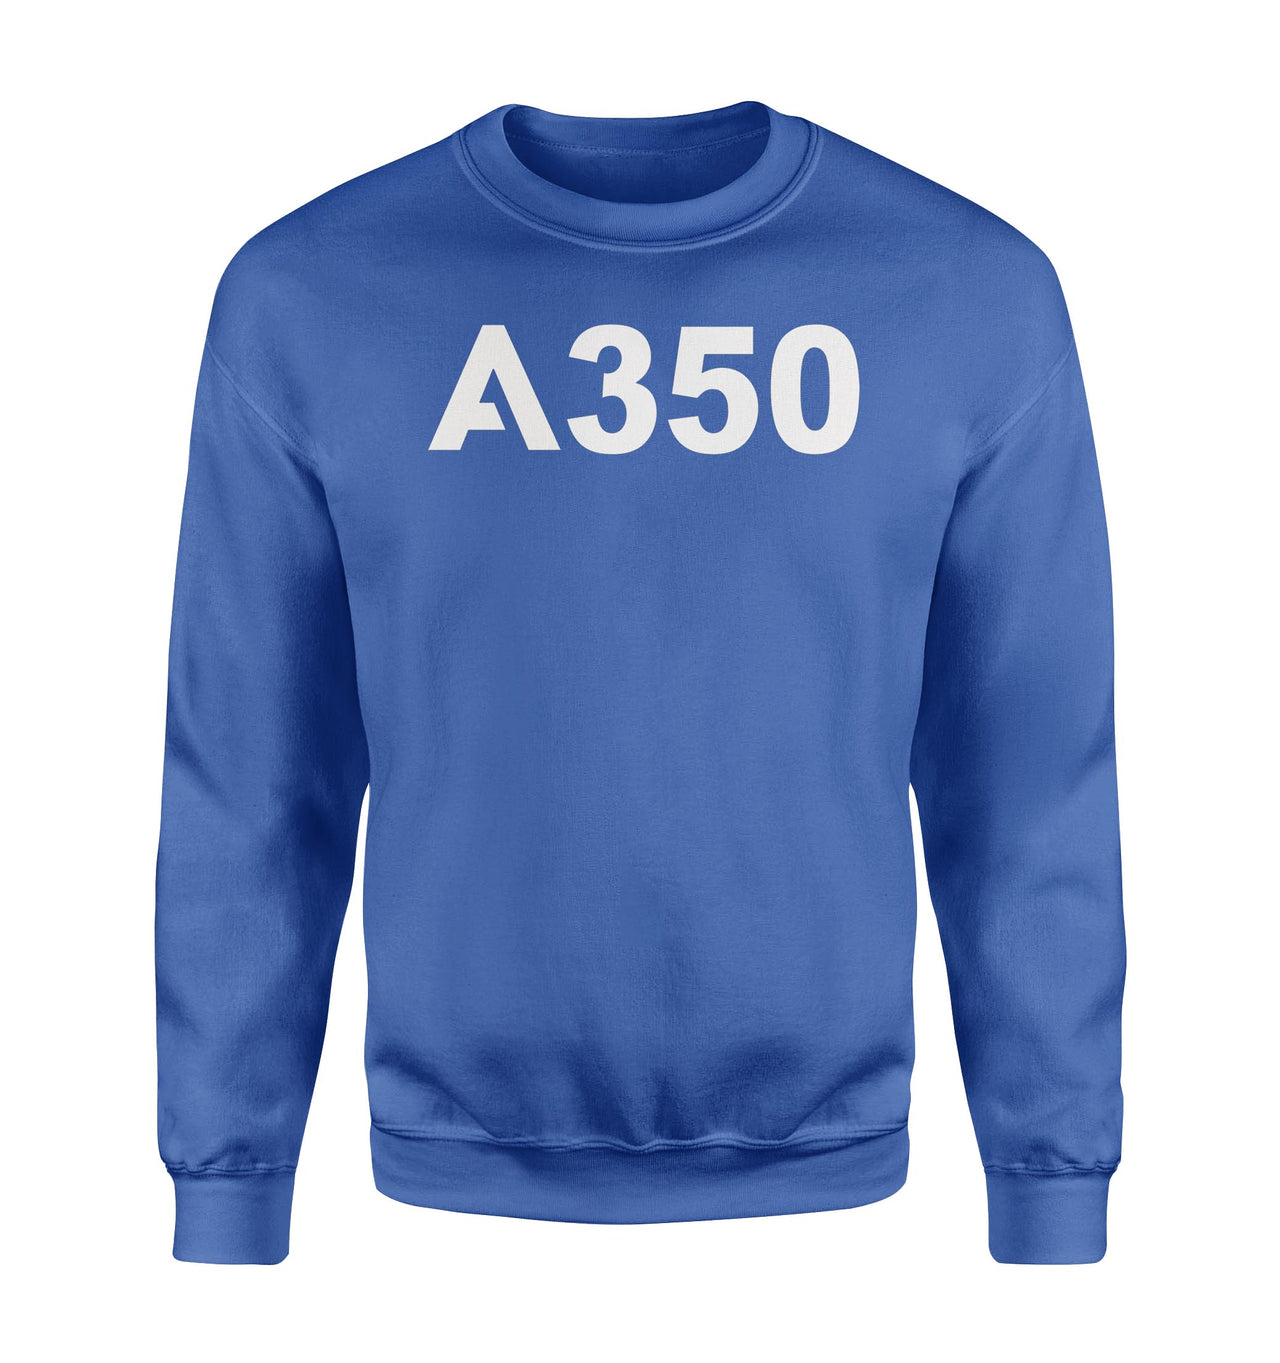 A350 Flat Text Designed Sweatshirts